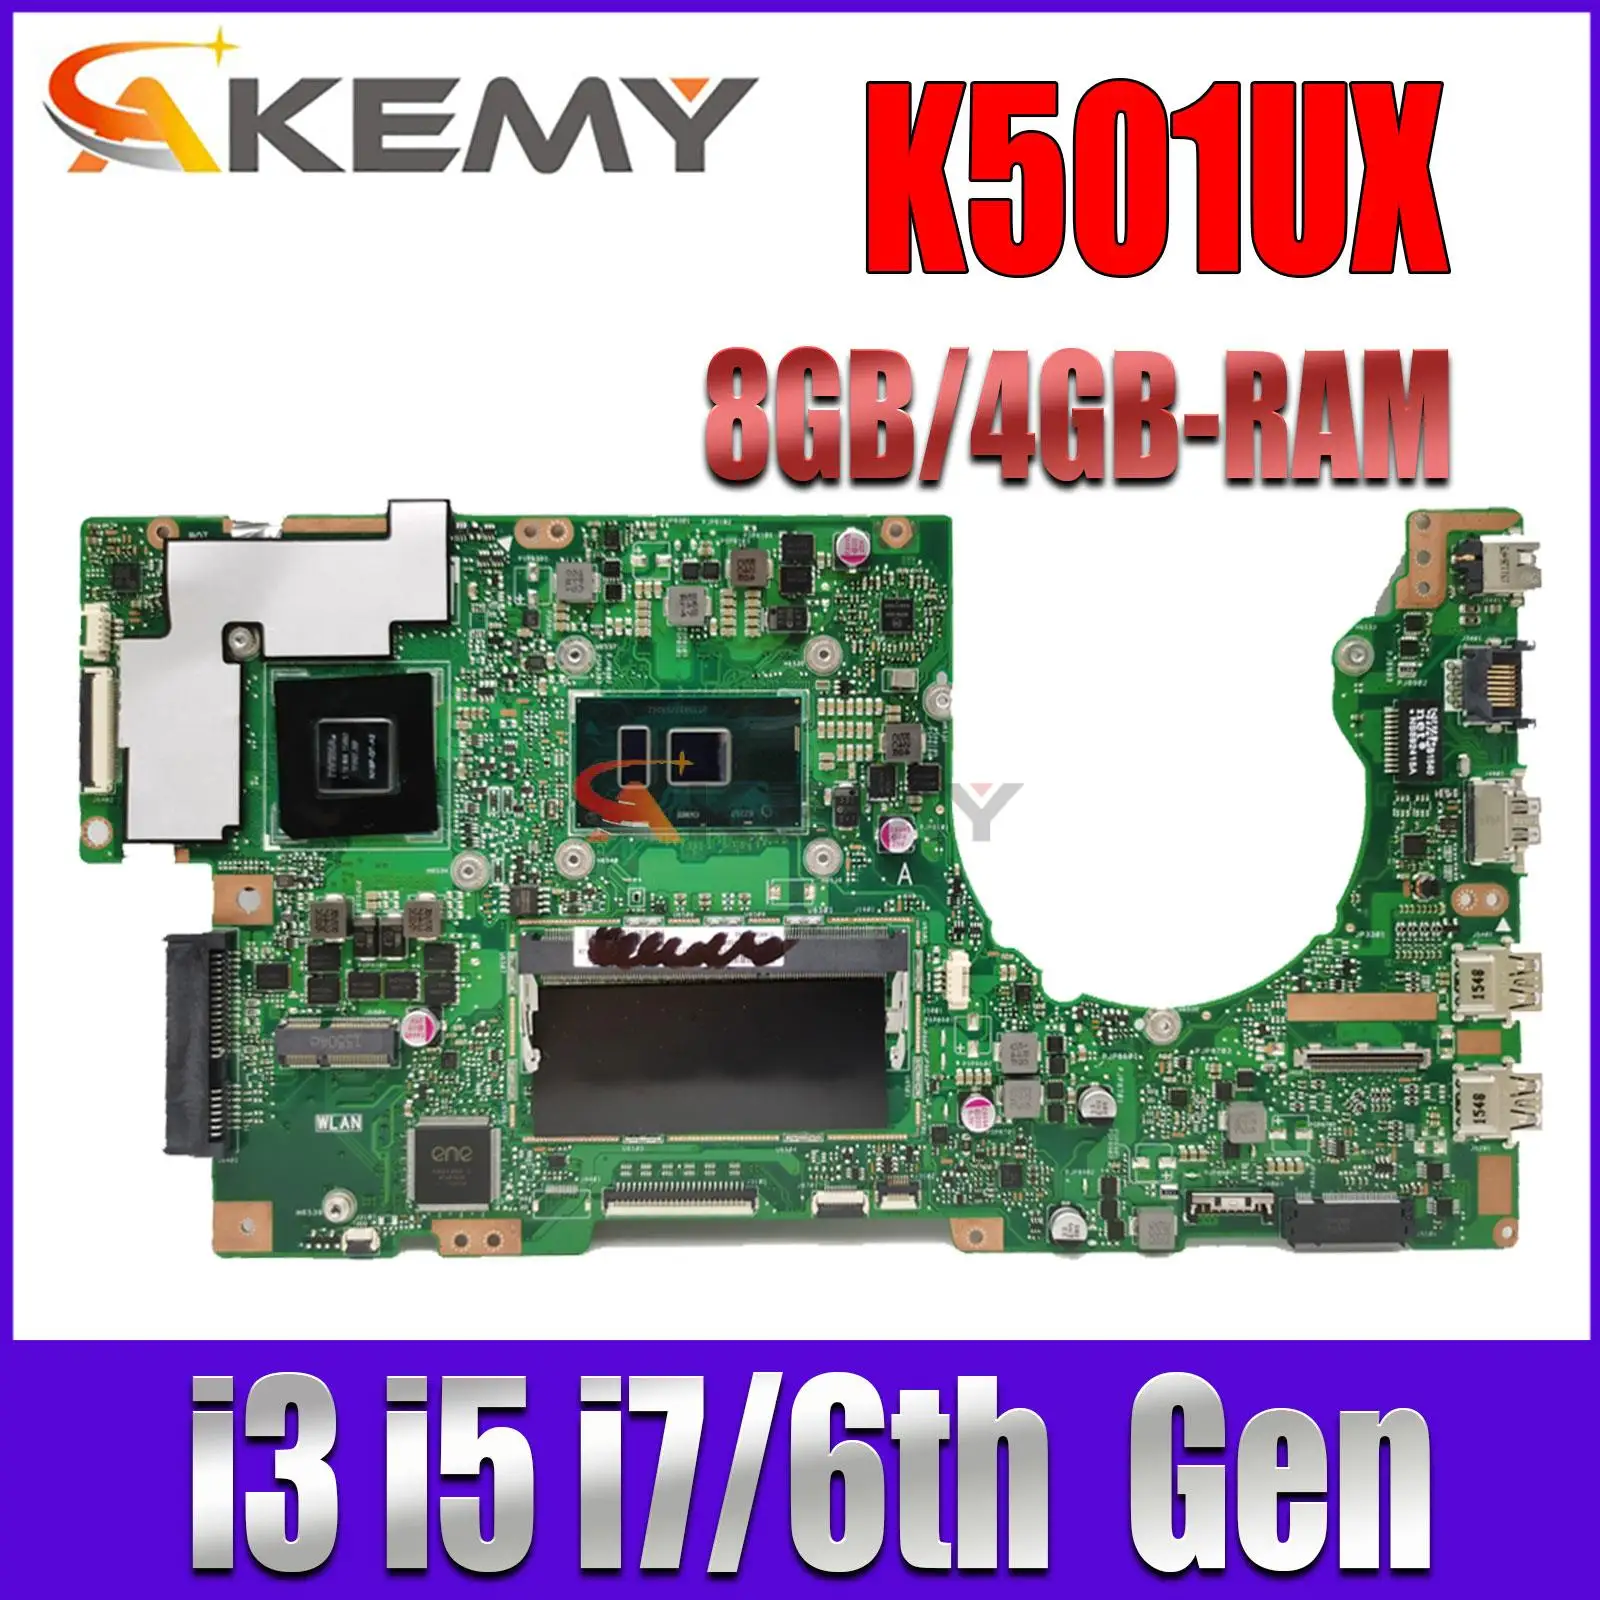 

K501UX MAINboard For ASUS K501UQ K501UB K501UXM Laptop Motherboard 8GB/4GB-RAM I7-6500U I5-6200U I3-6100U DDR3 100% Test